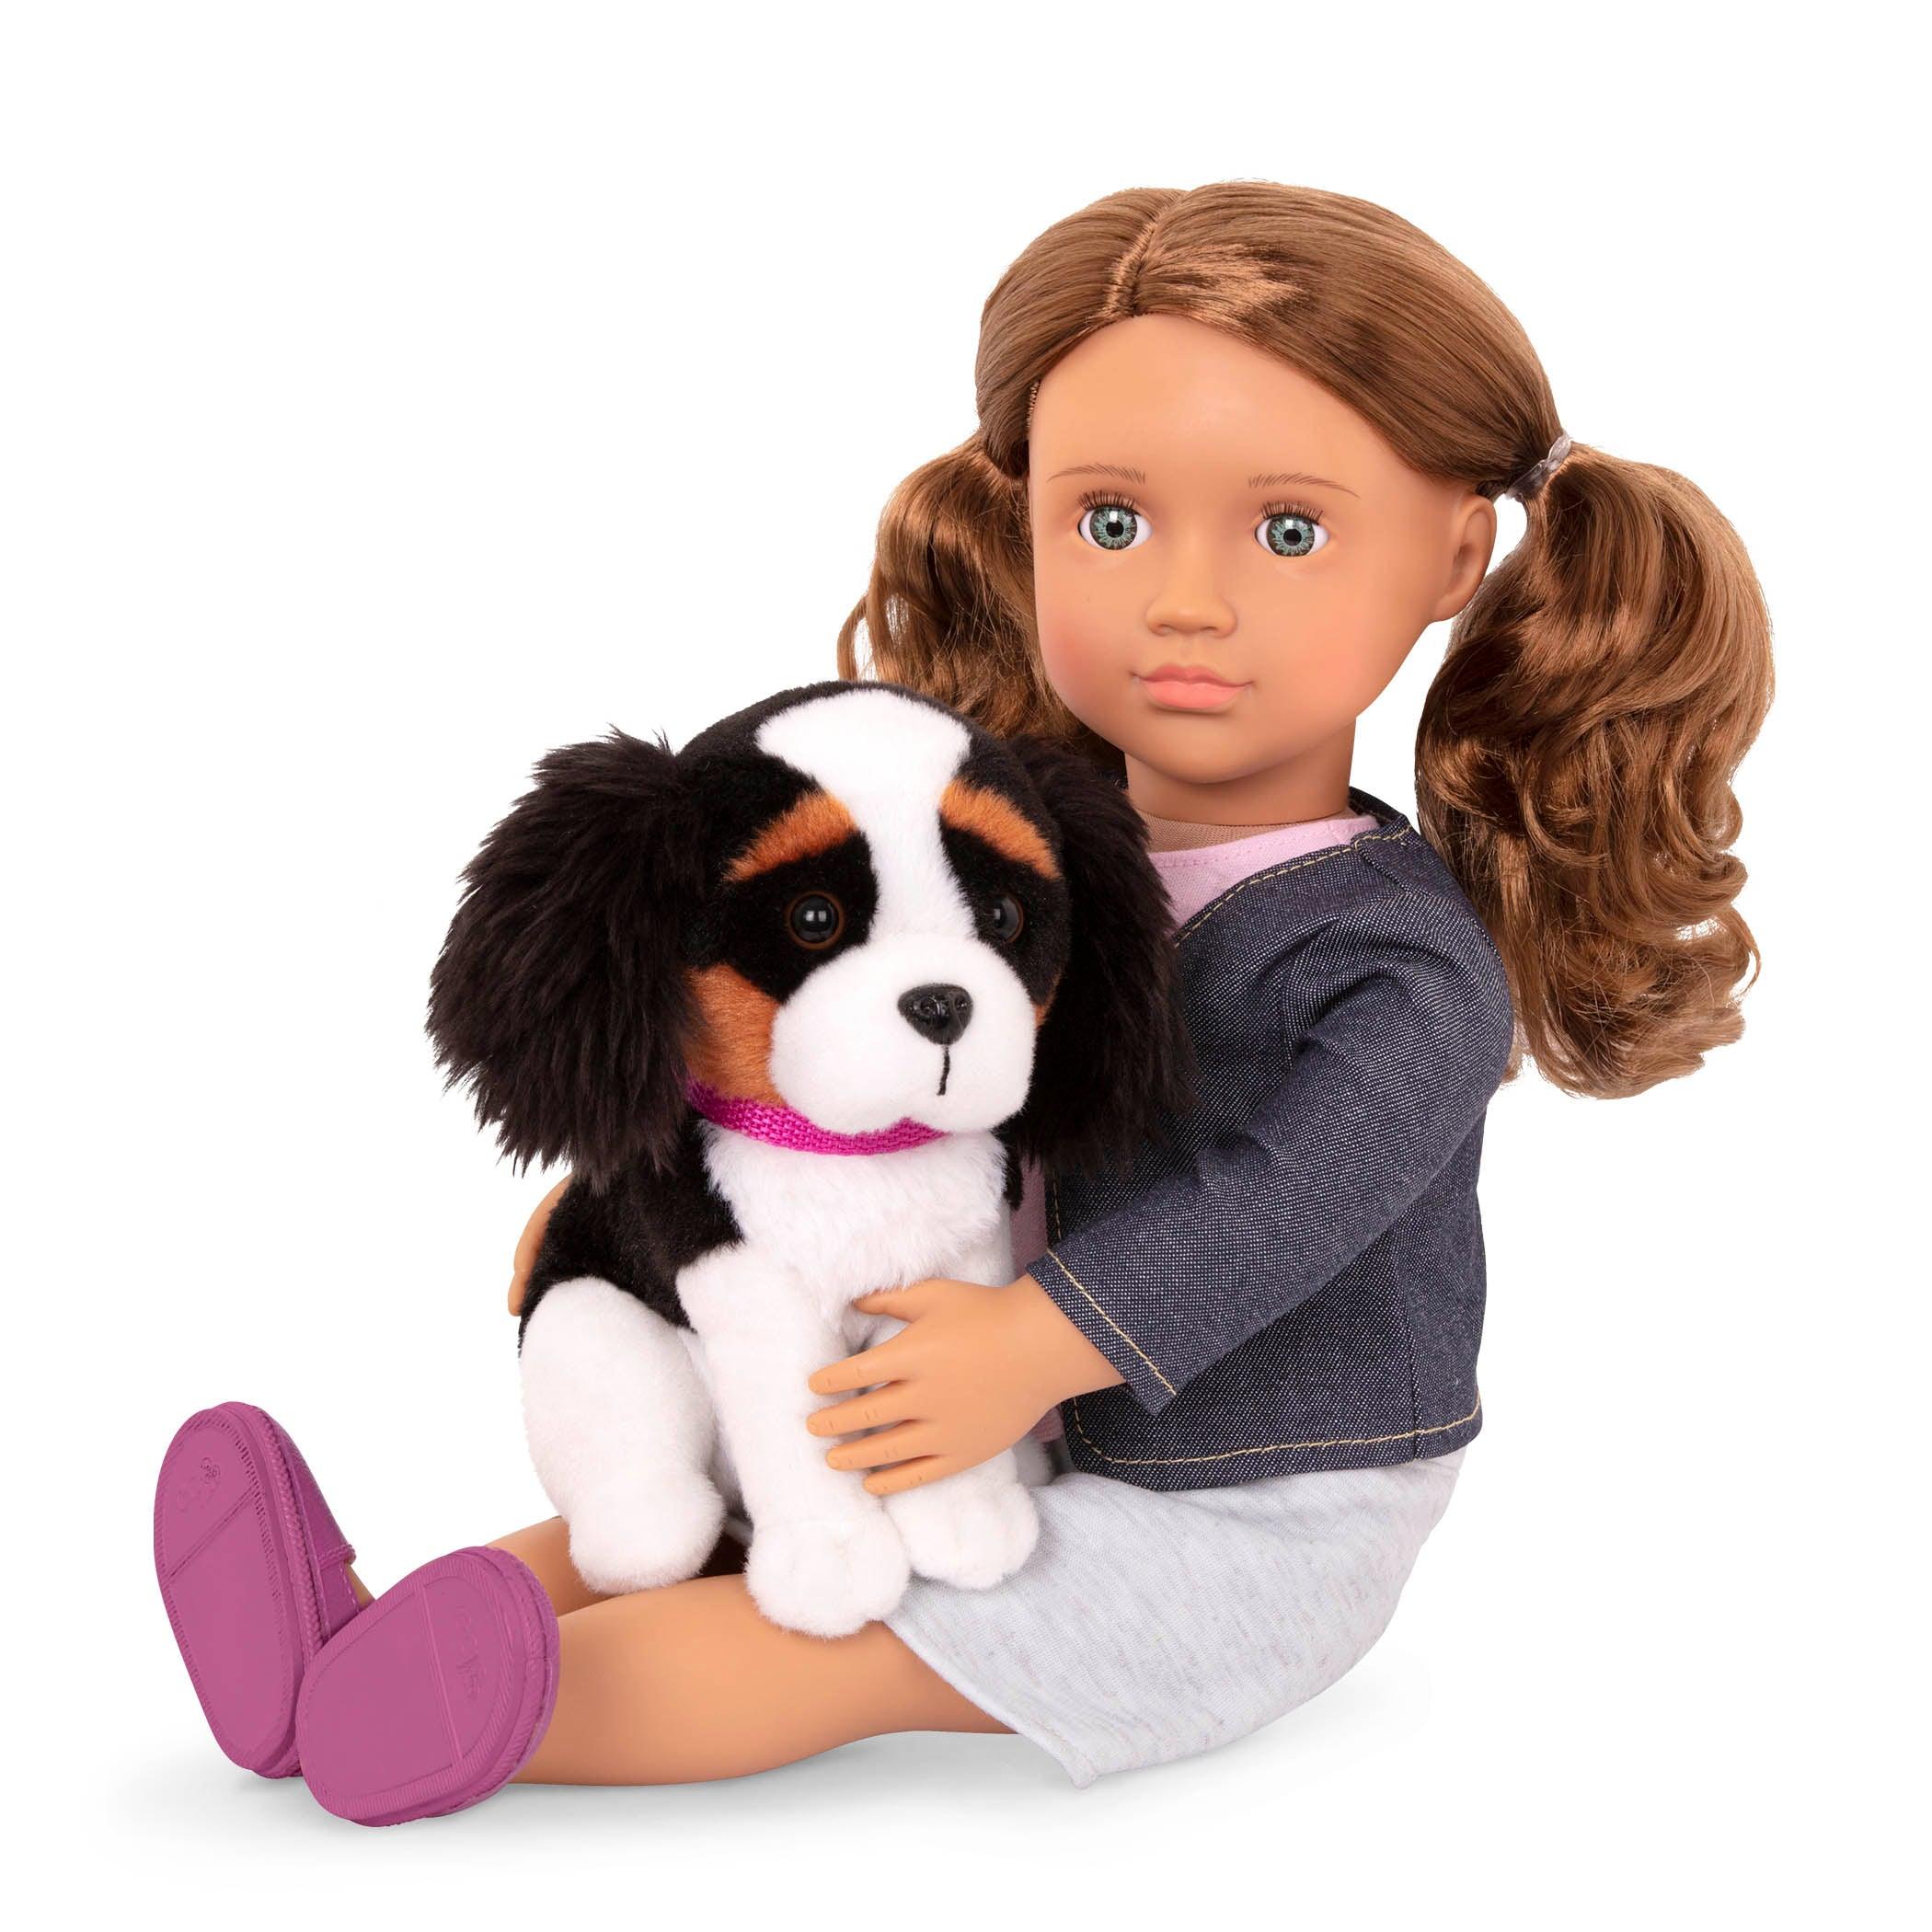 Our Generation: Maddie 46 cm doggie doll